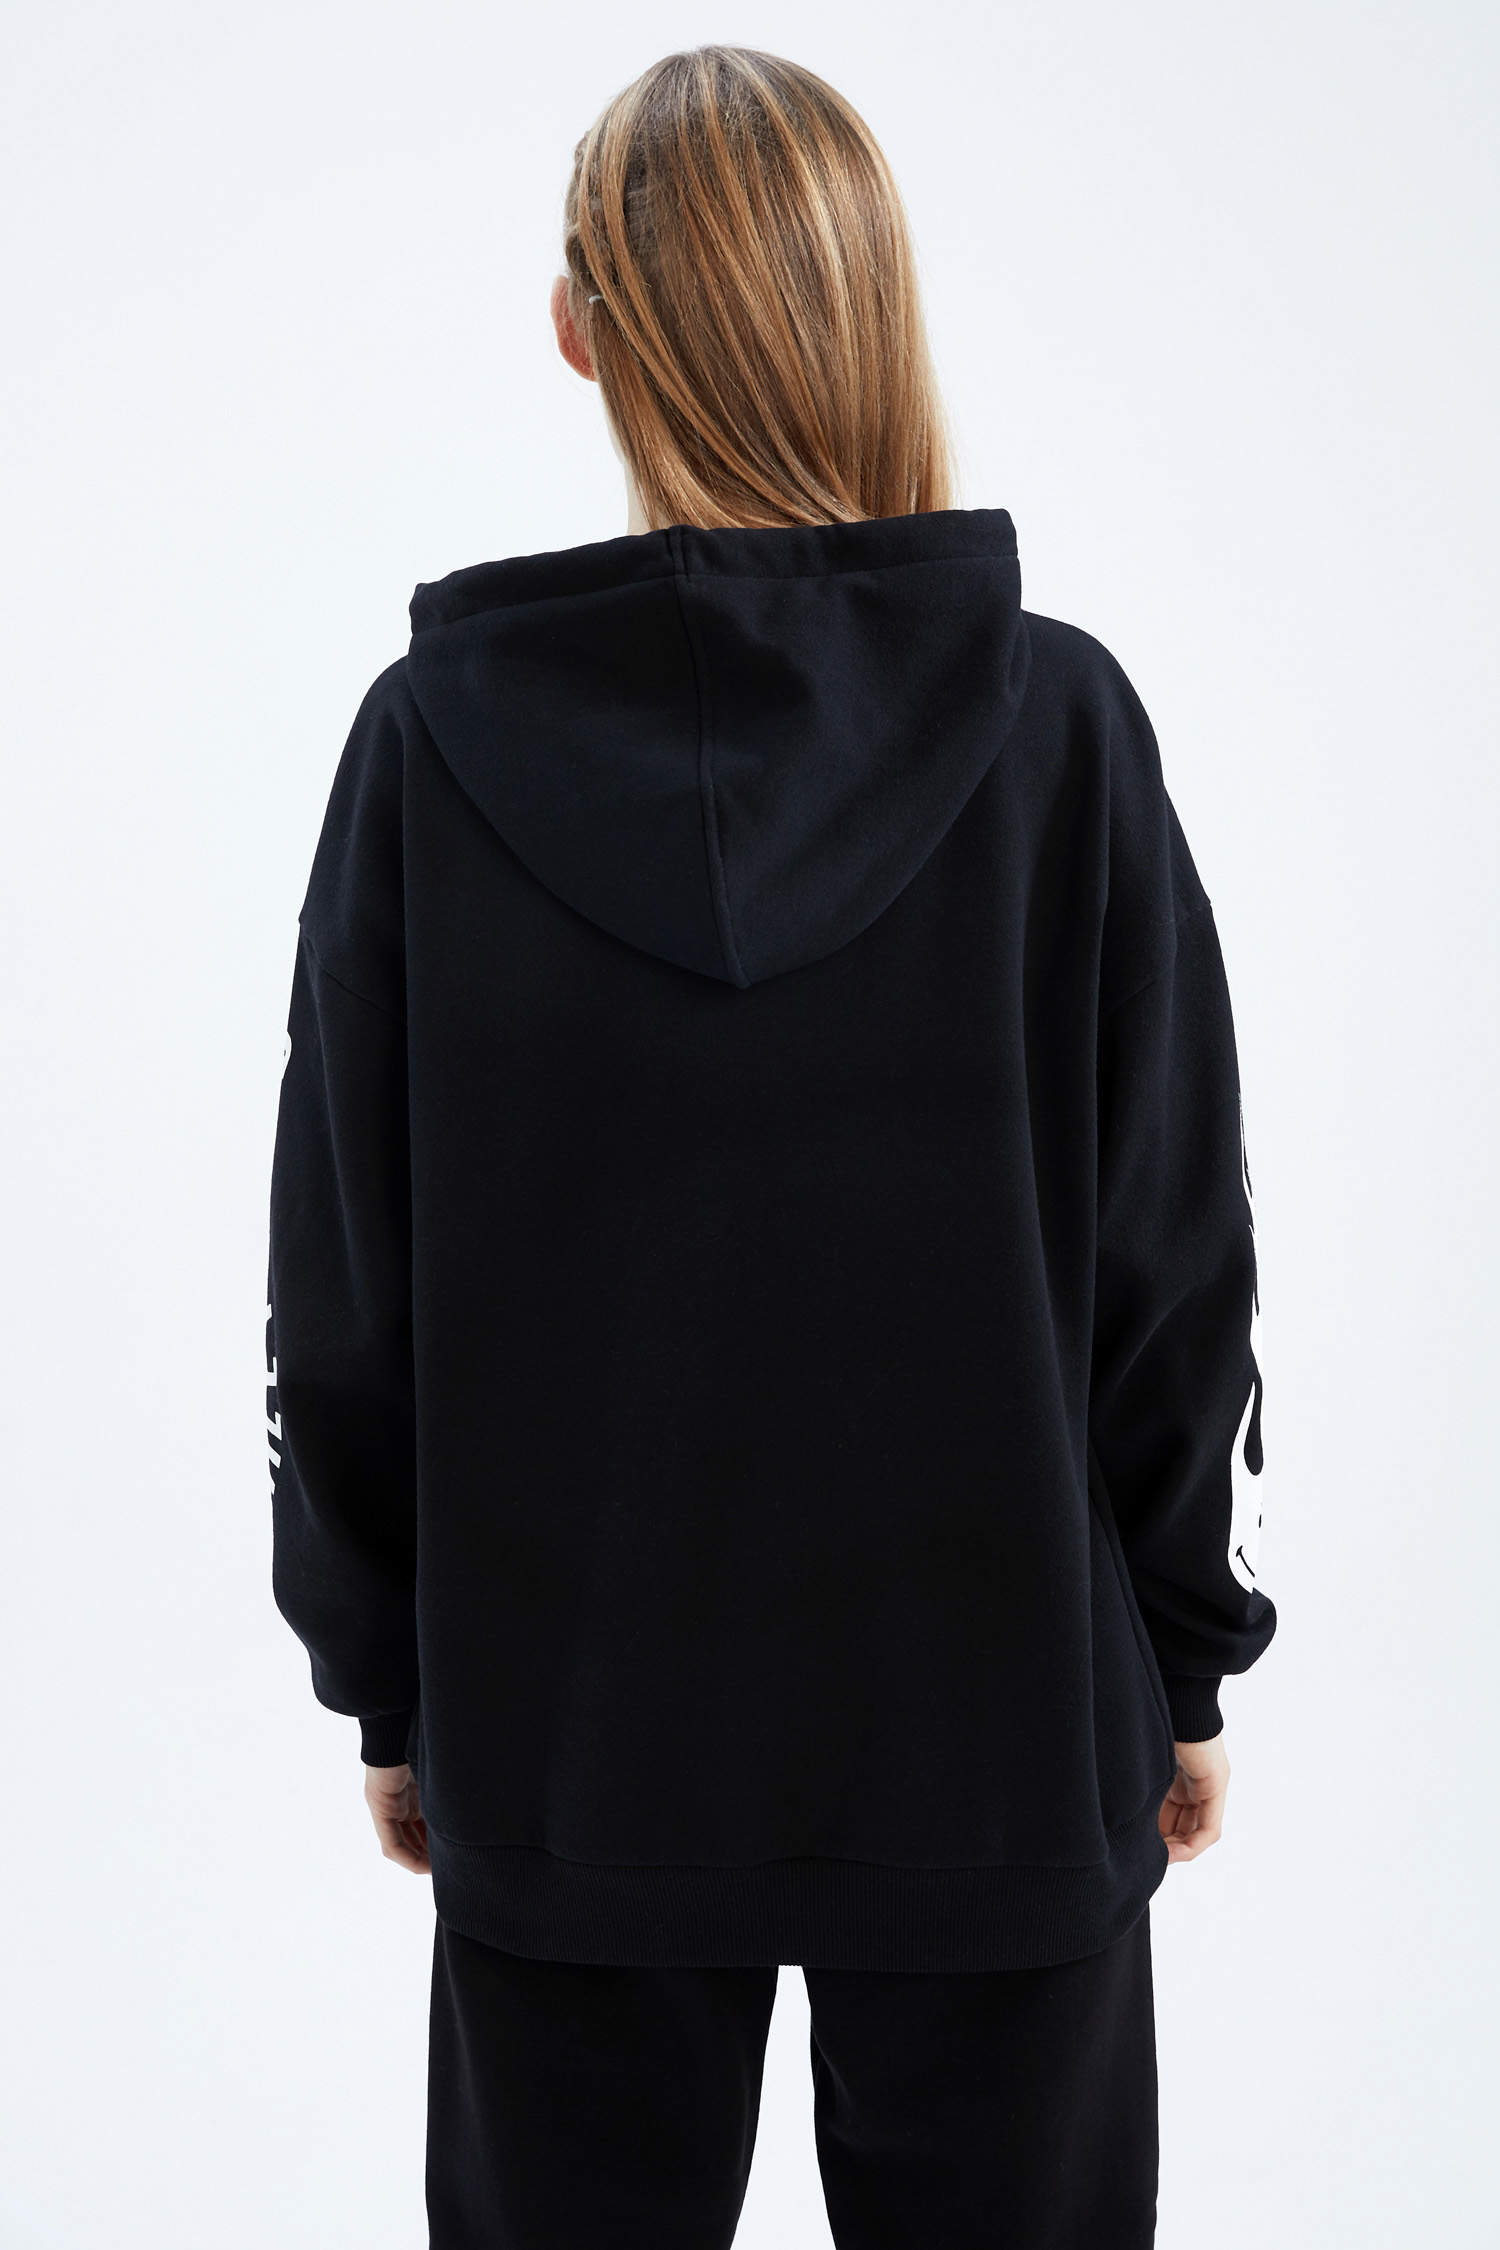 Women's sweatshirt DCH family, oversized hoodies model: Jay, fabric:  Futer 3x thread loop, color: black